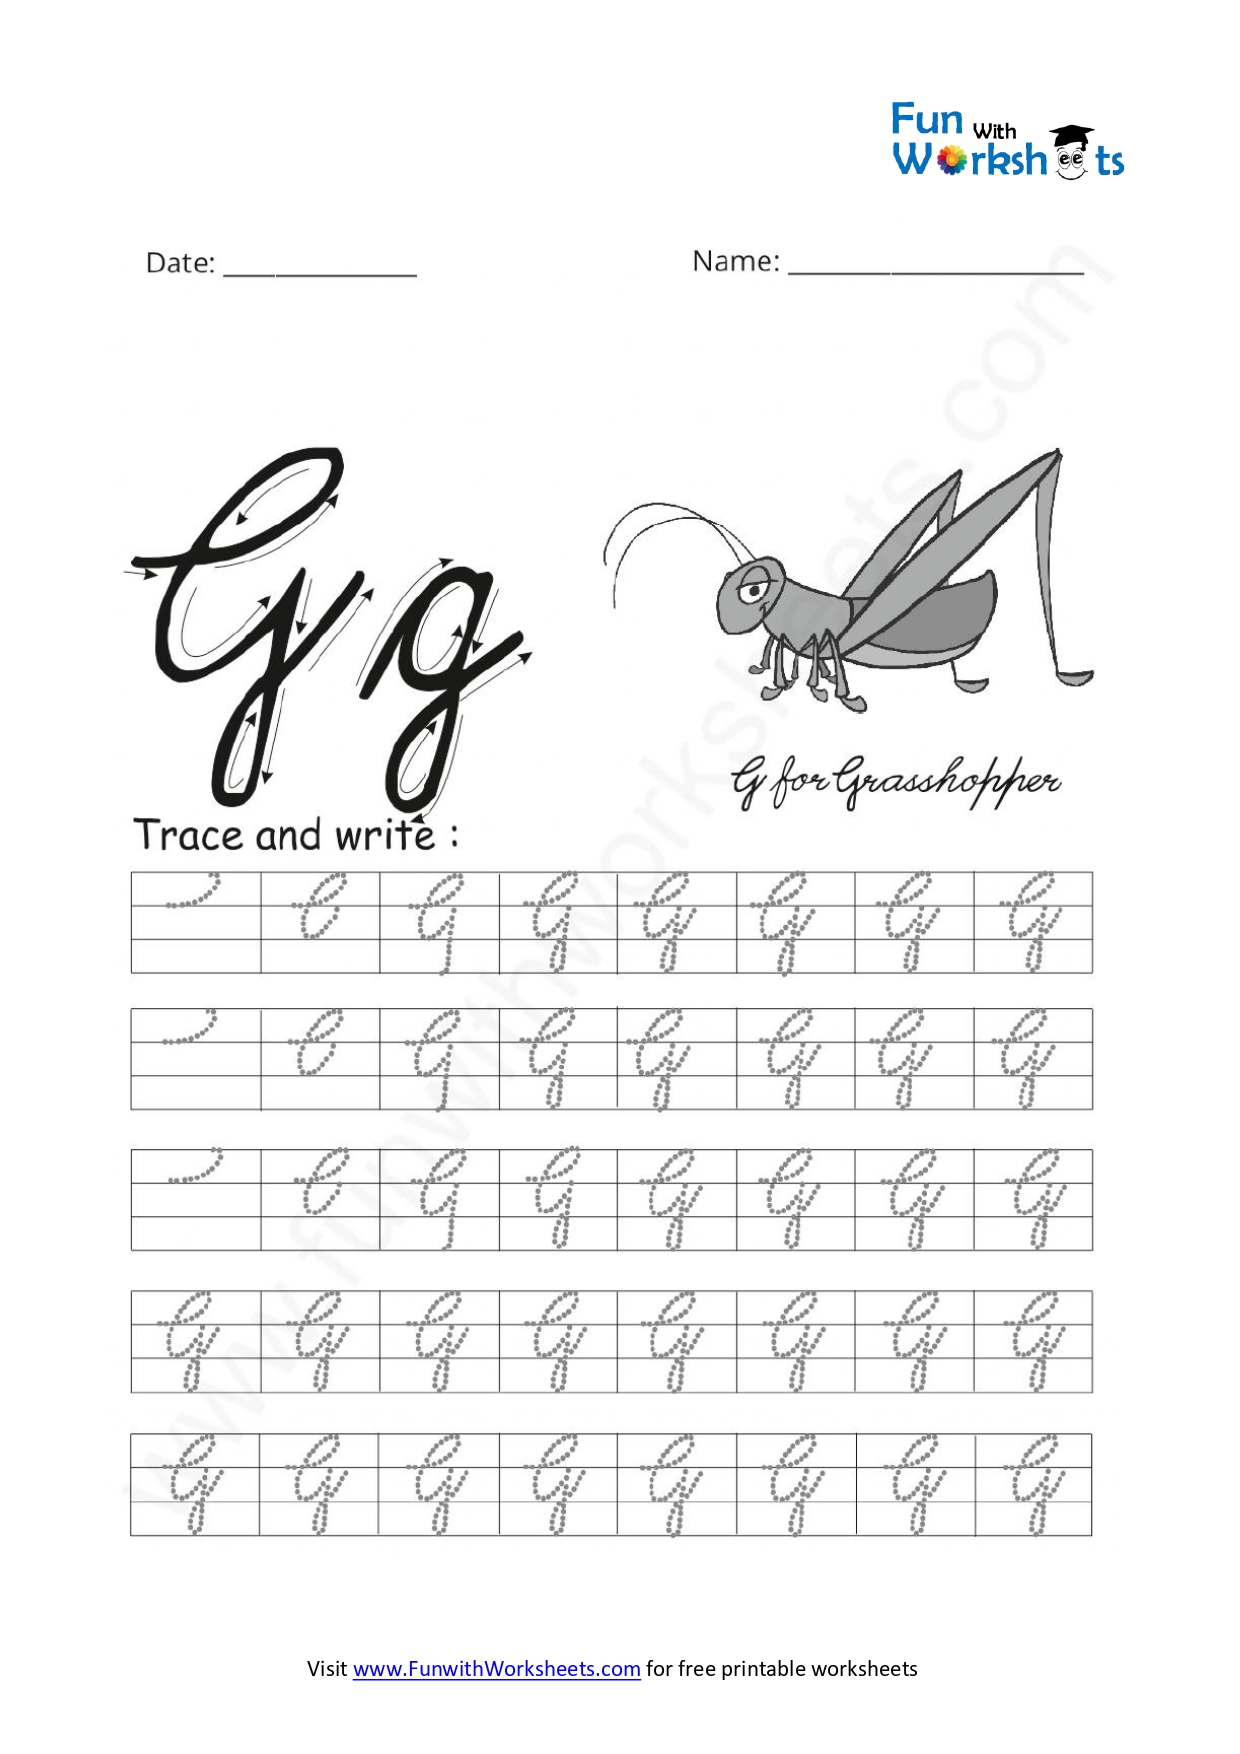 Cursive Handwriting Practice Capital Letter G - free printable